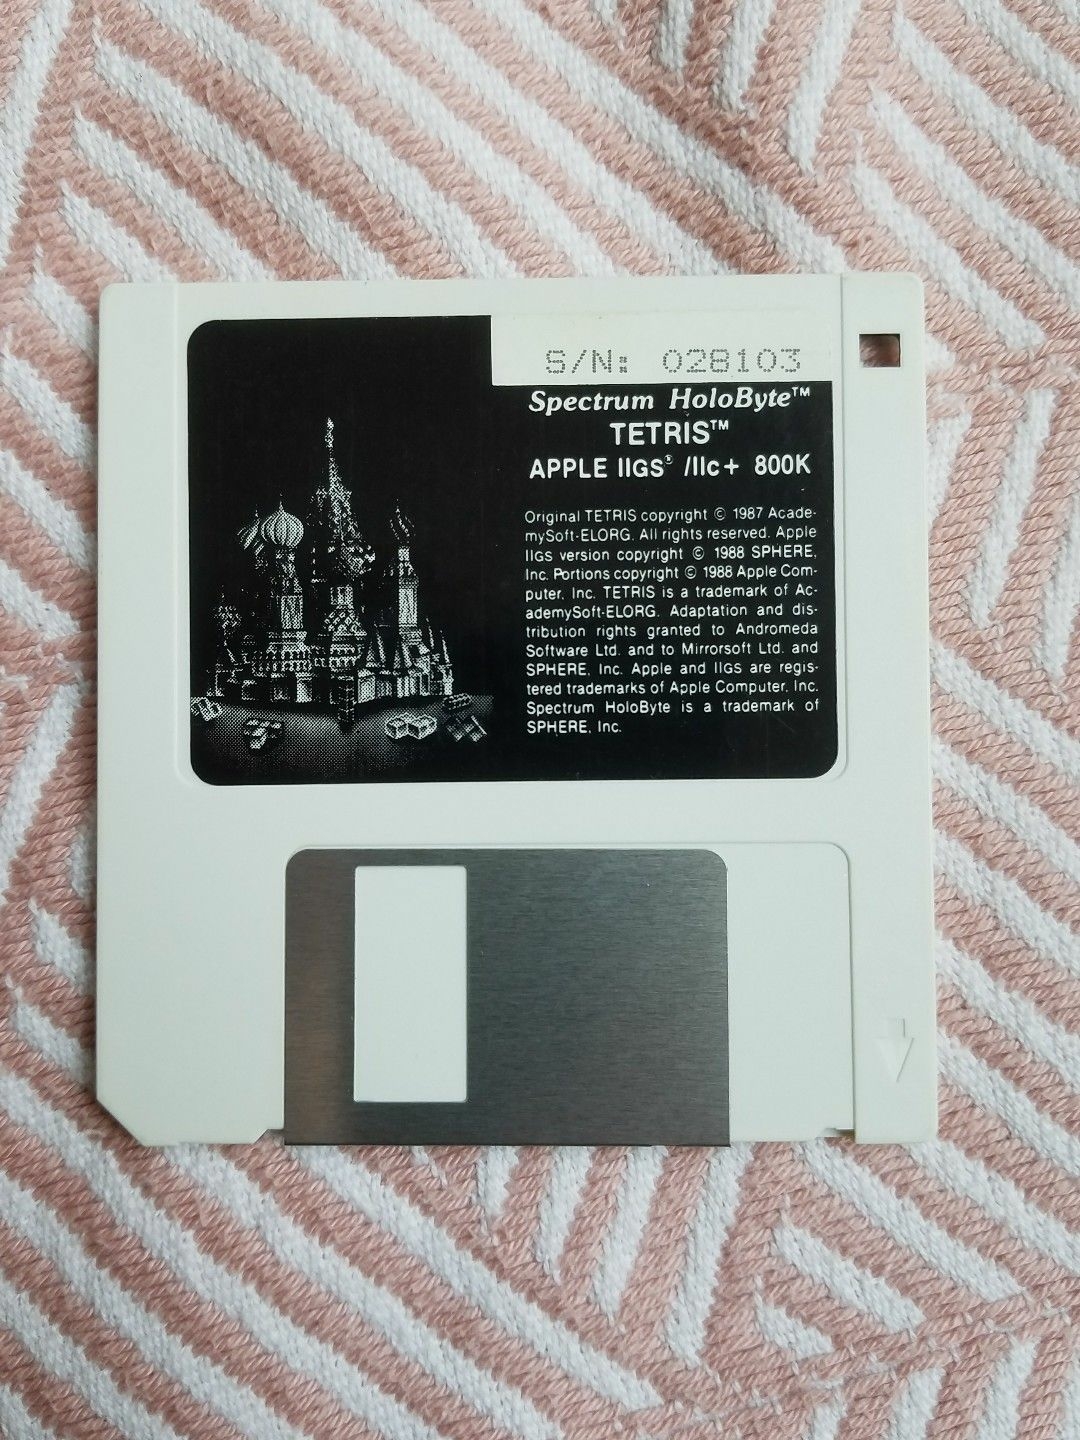 Tetrie 3.5 disk